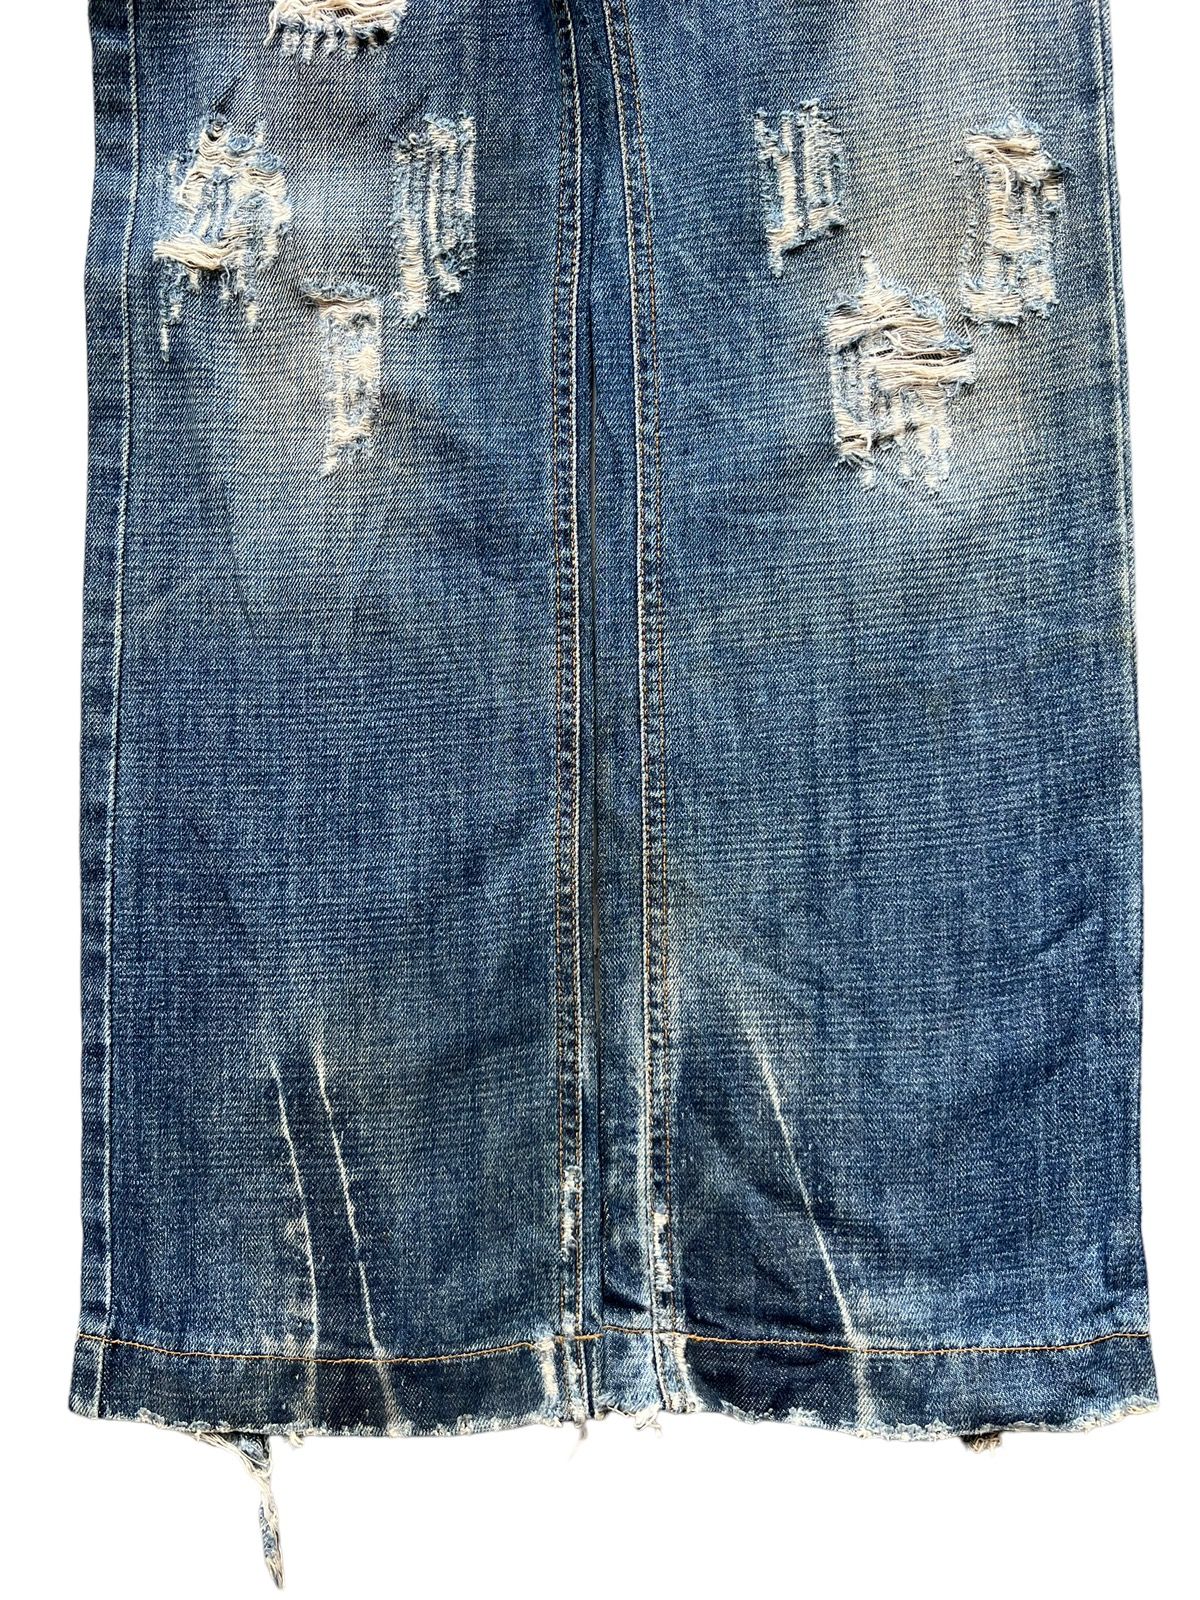 Dolce and Gabbana Crash Distressed Denim Jeans 31x32.5 - 5